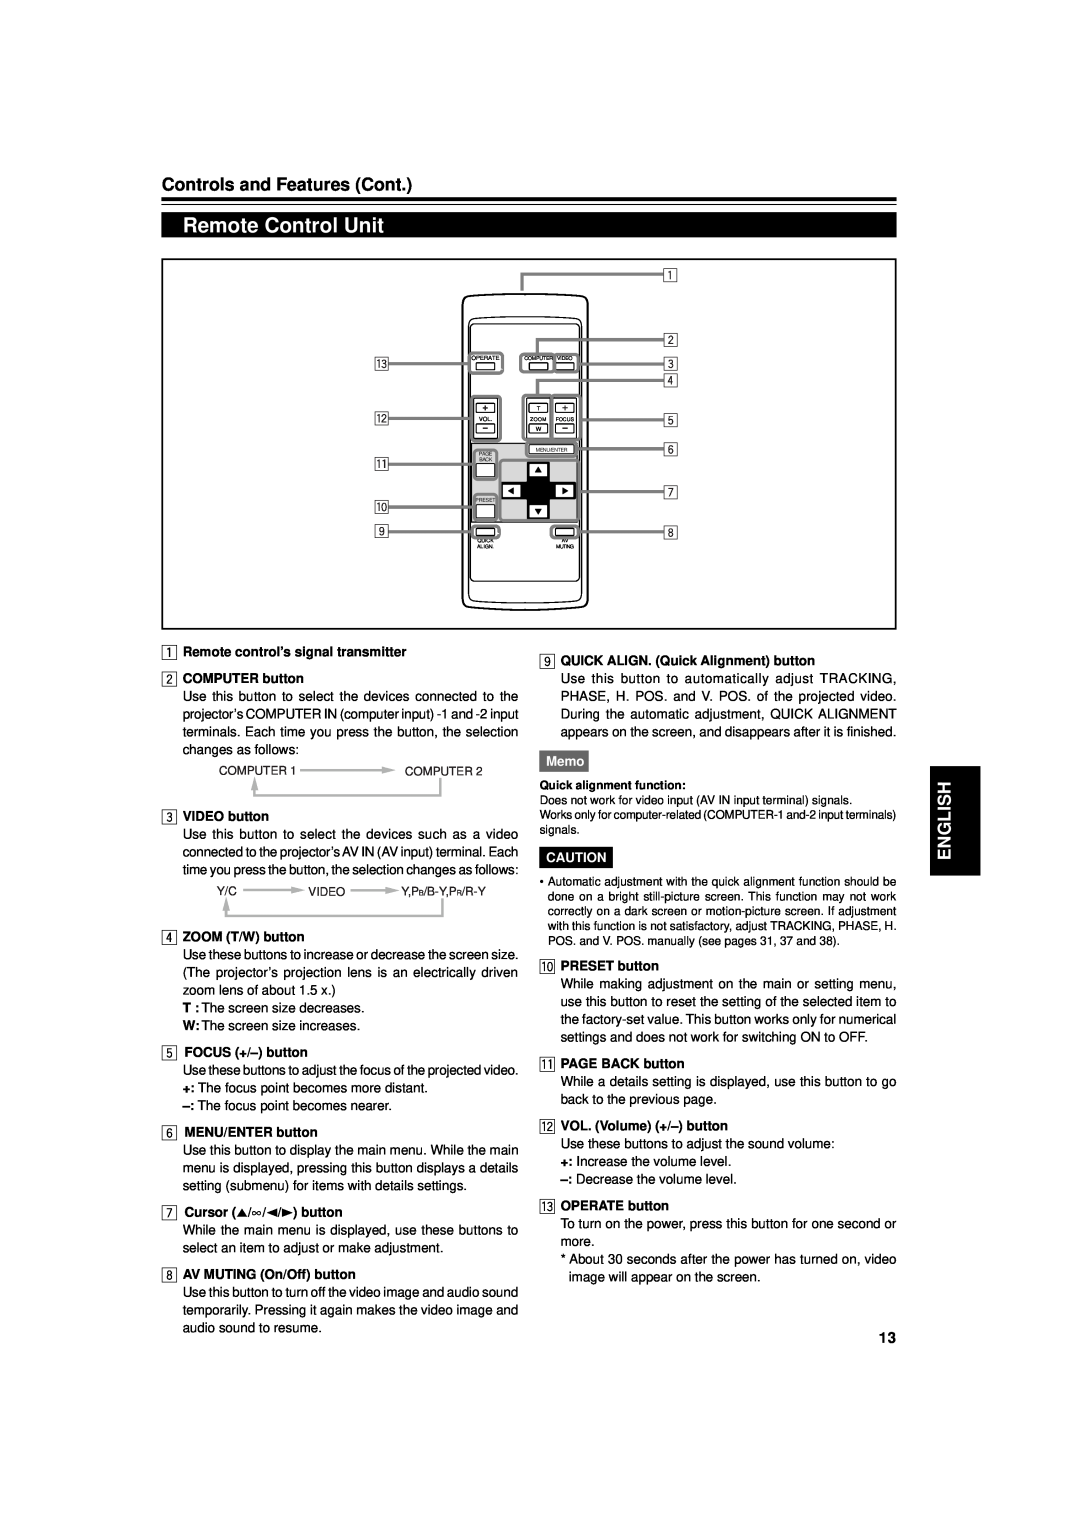 JVC DLA-G15U manual Remote Control Unit, Controls and Features Cont, English, w q p, VIDEO button, ZOOM T/W button, Memo 